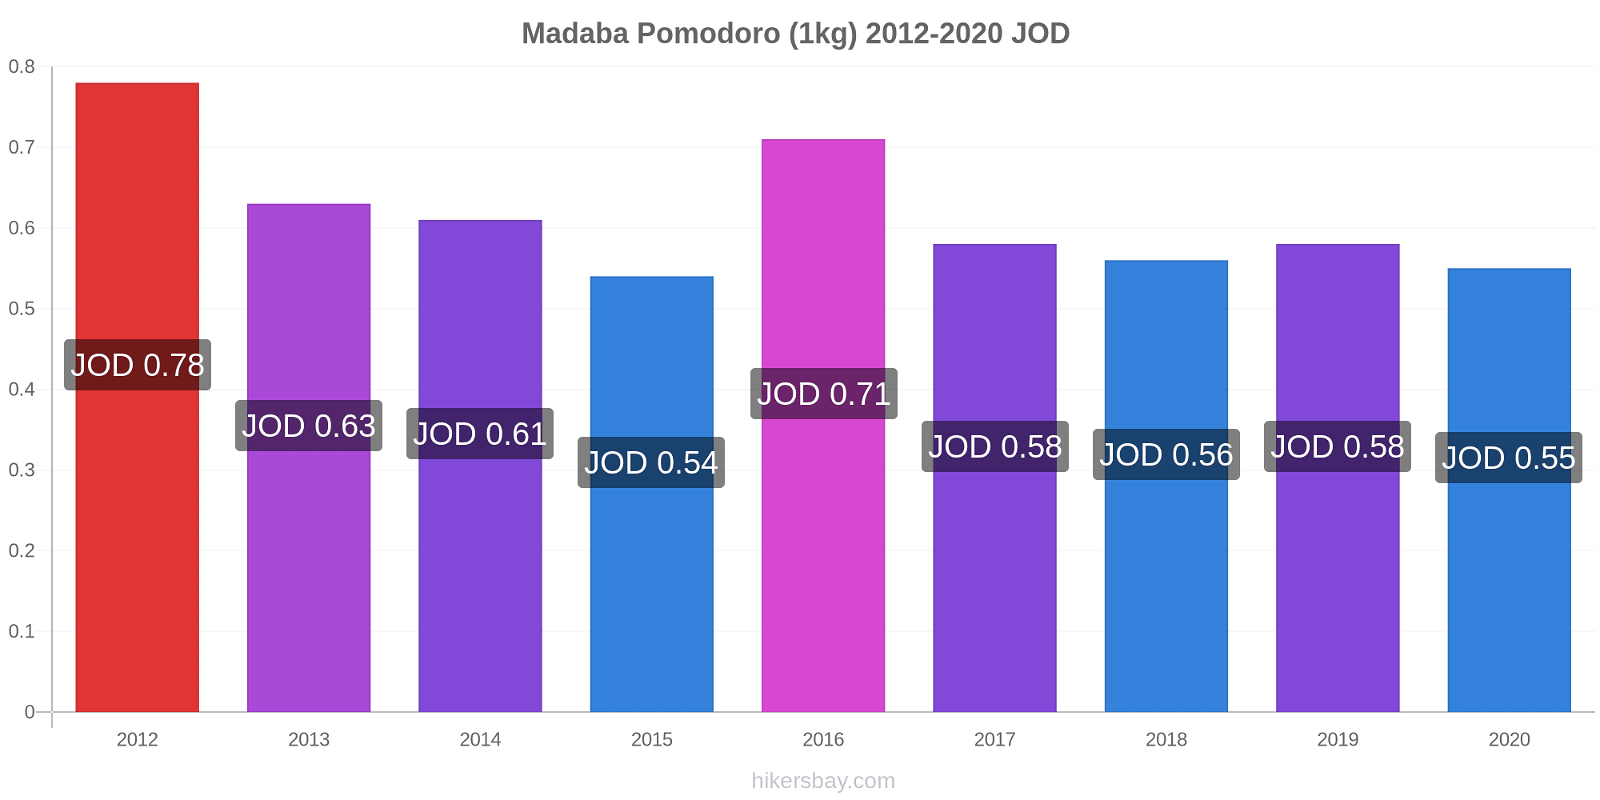 Madaba variazioni di prezzo Pomodoro (1kg) hikersbay.com